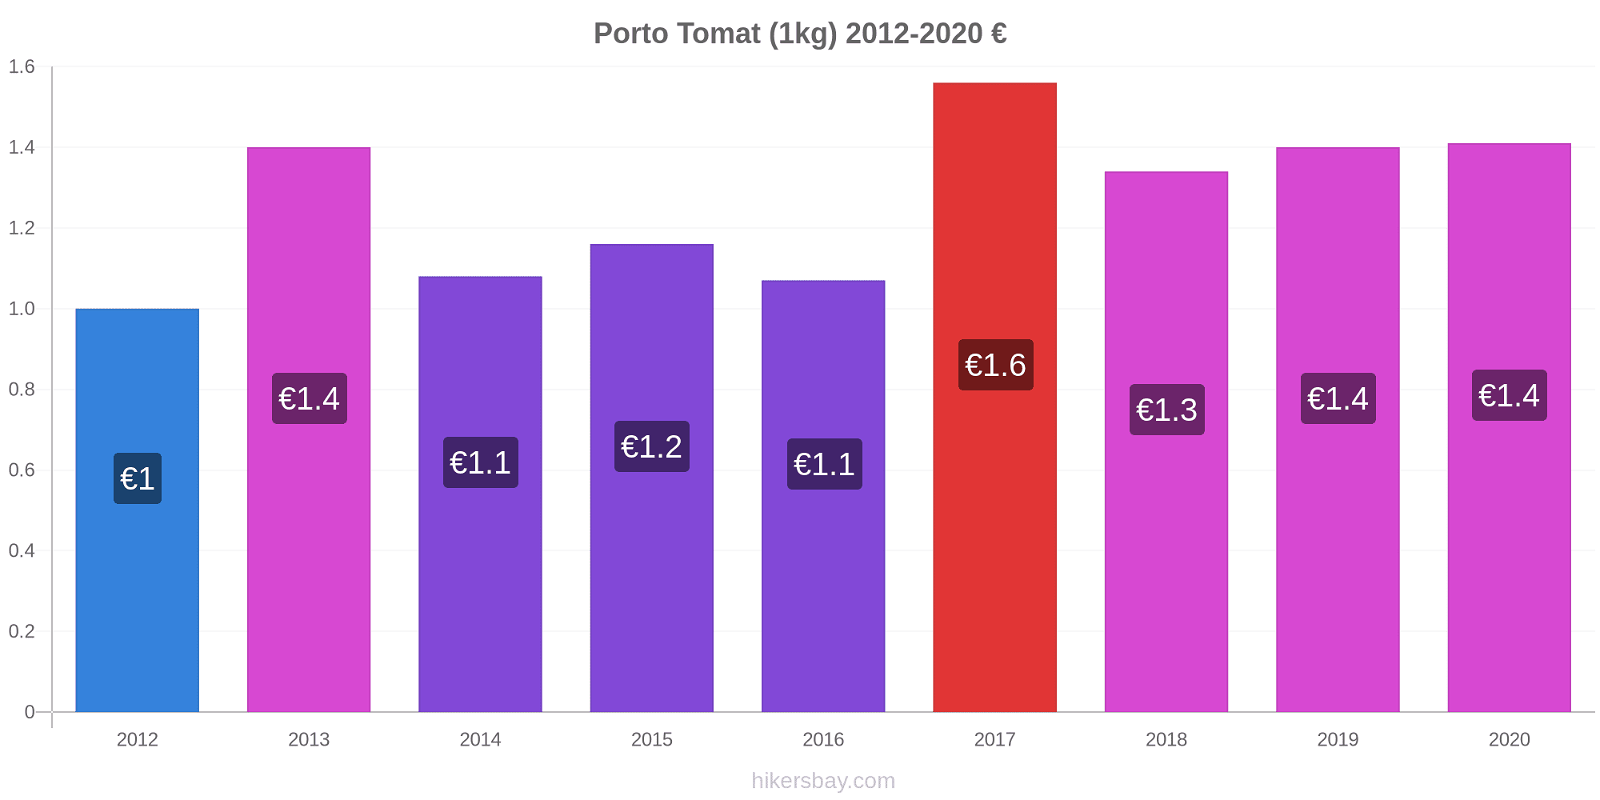 Porto perubahan harga Tomat (1kg) hikersbay.com